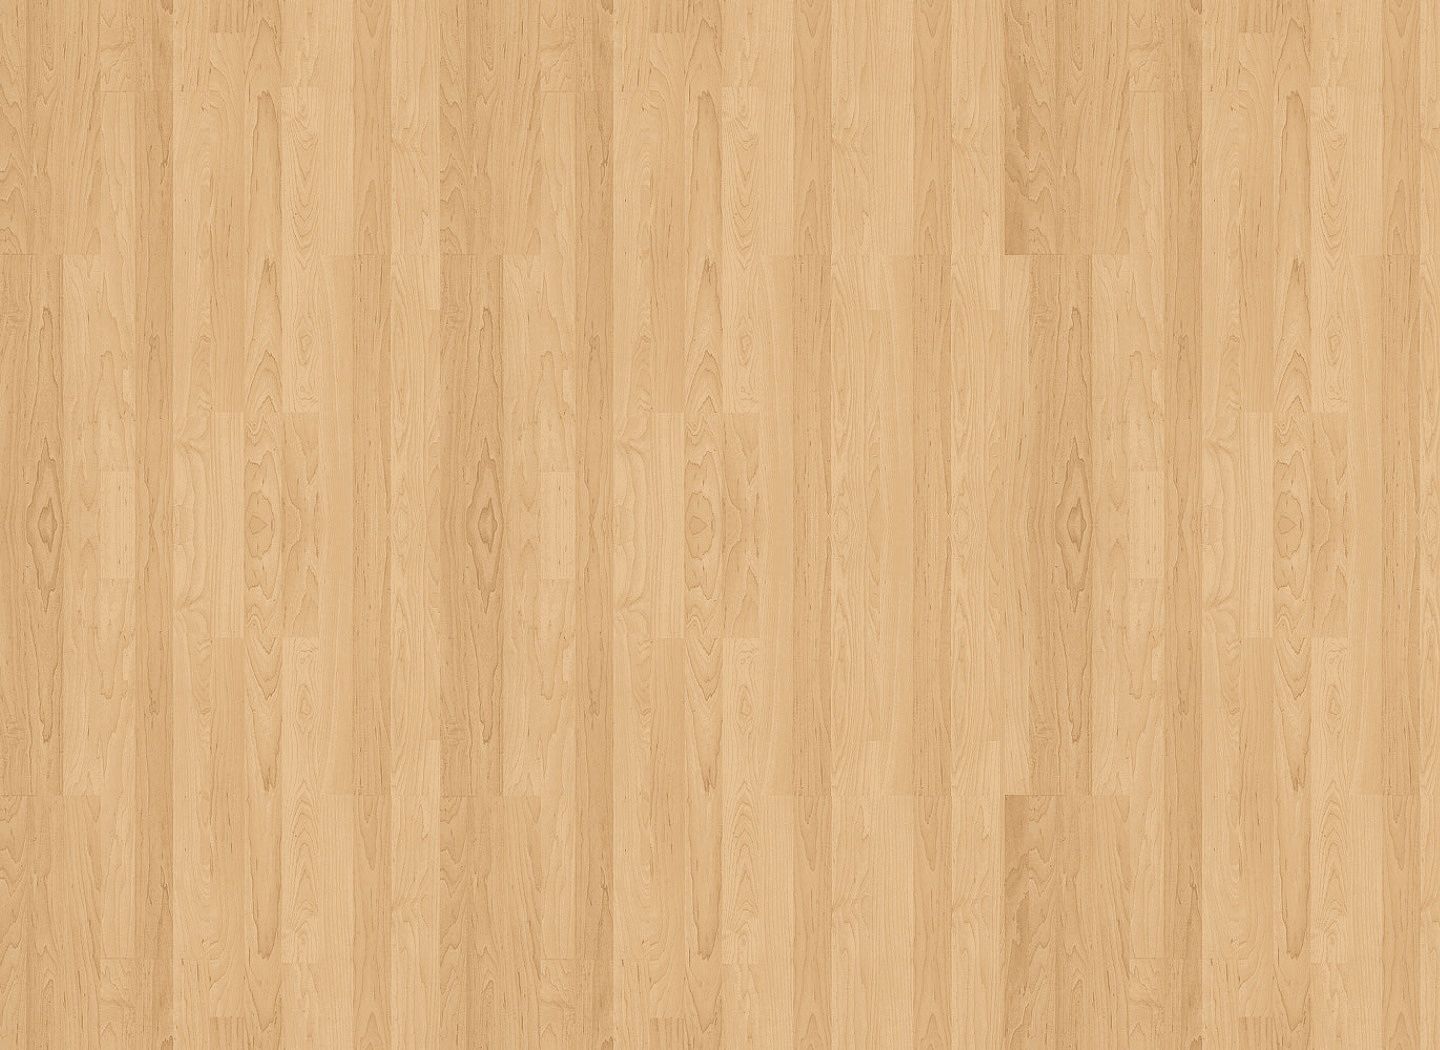 Wood floor by gnrbishop on DeviantArt